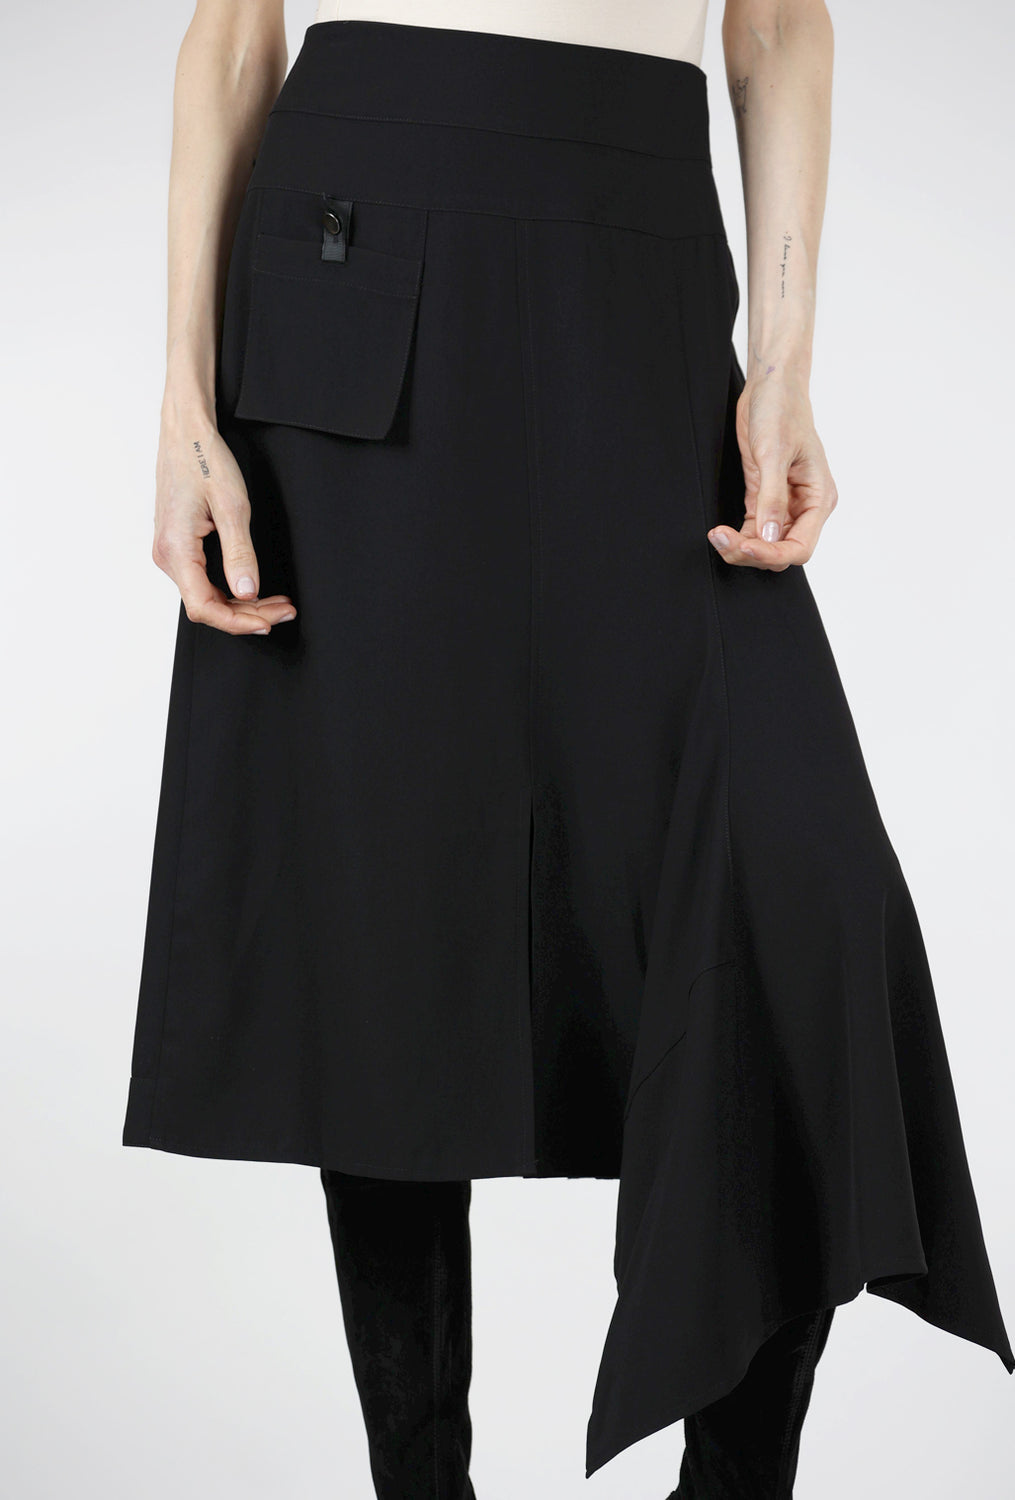 Peace of Cloth Becca Asym Skirt, Black 